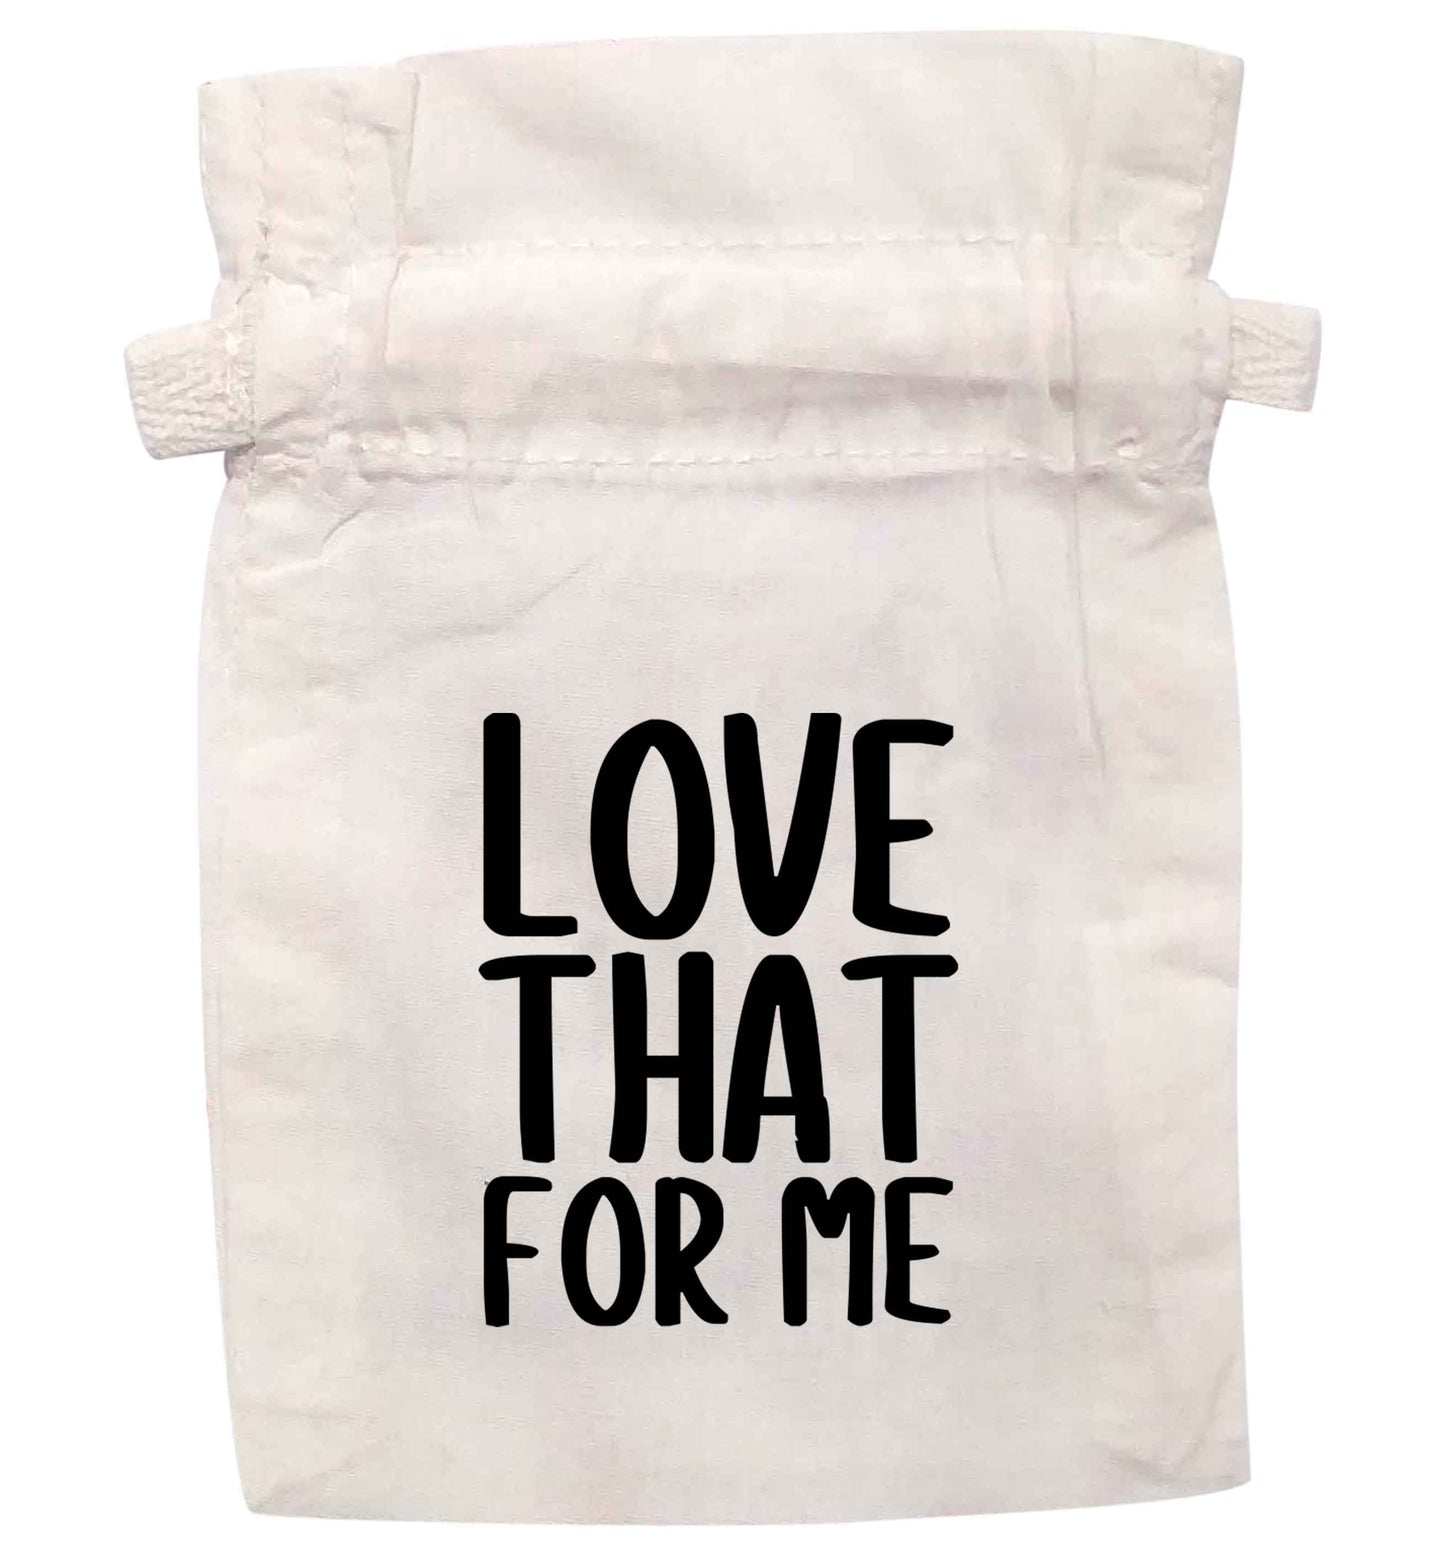 Love that for me | XS - L | Pouch / Drawstring bag / Sack | Organic Cotton | Bulk discounts available!